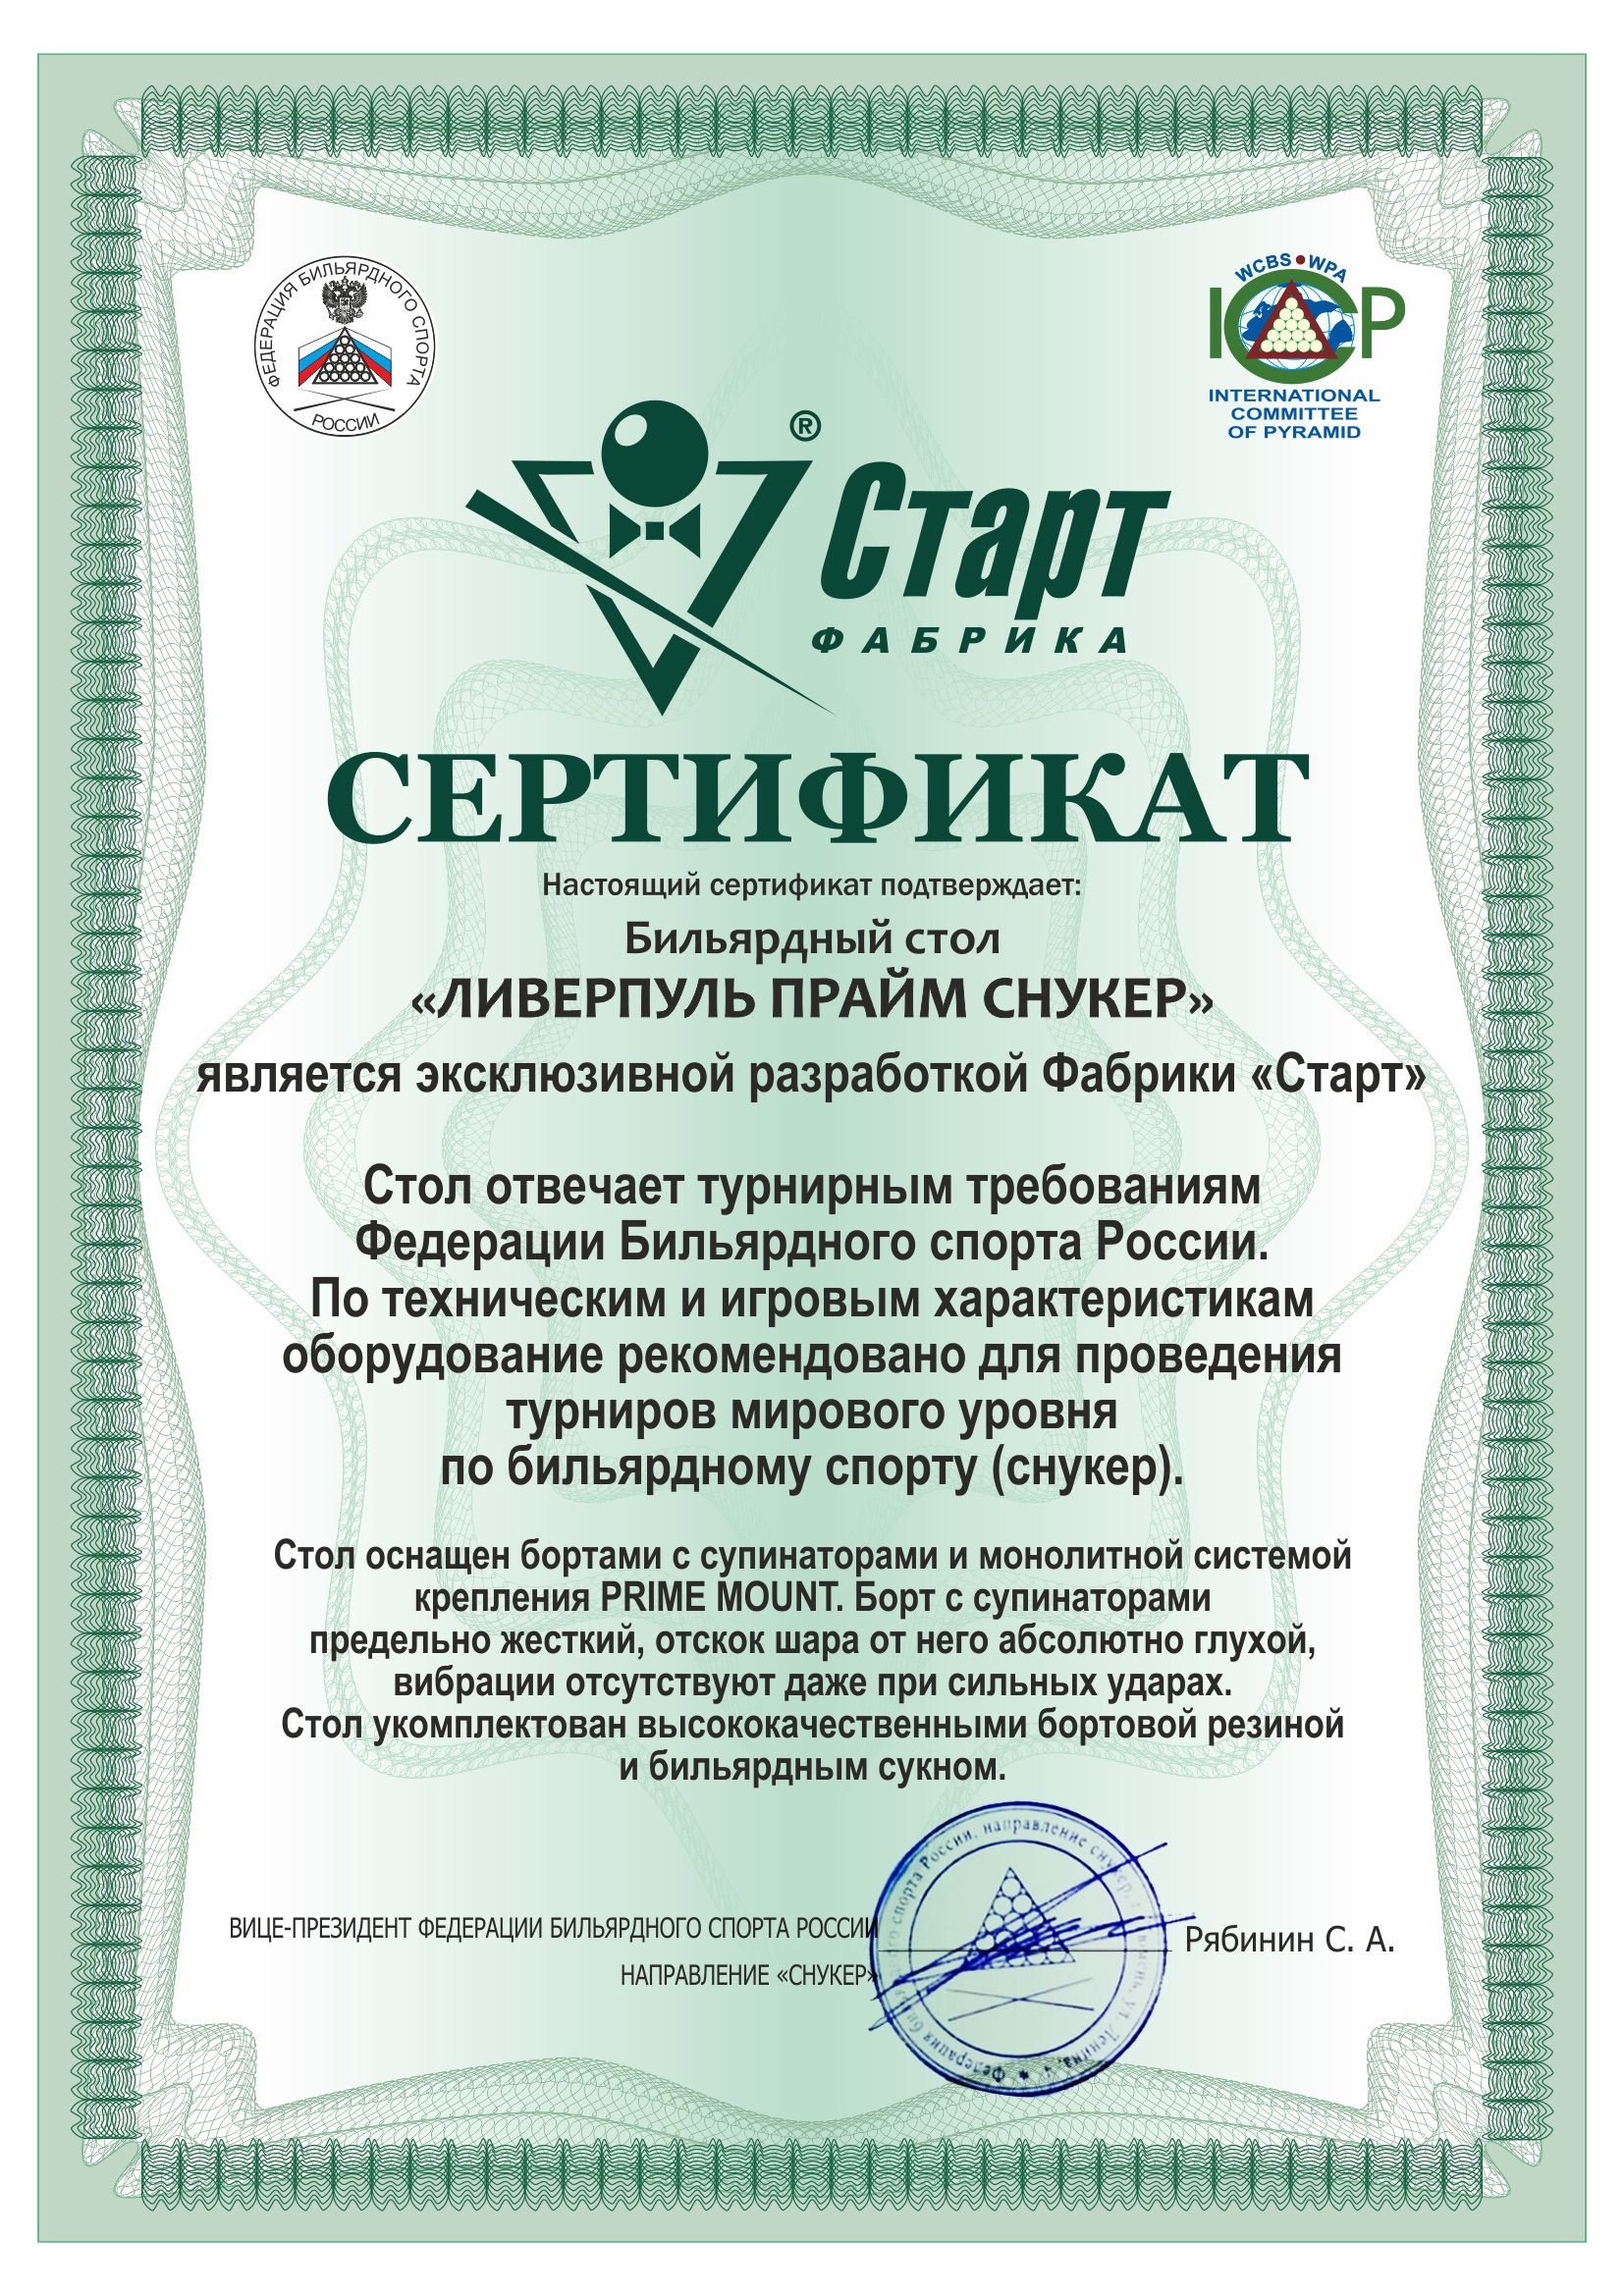 2_Сертификат_ЛИВЕРПУЛЬ-ПРАЙМ-СНУКЕР.jpg